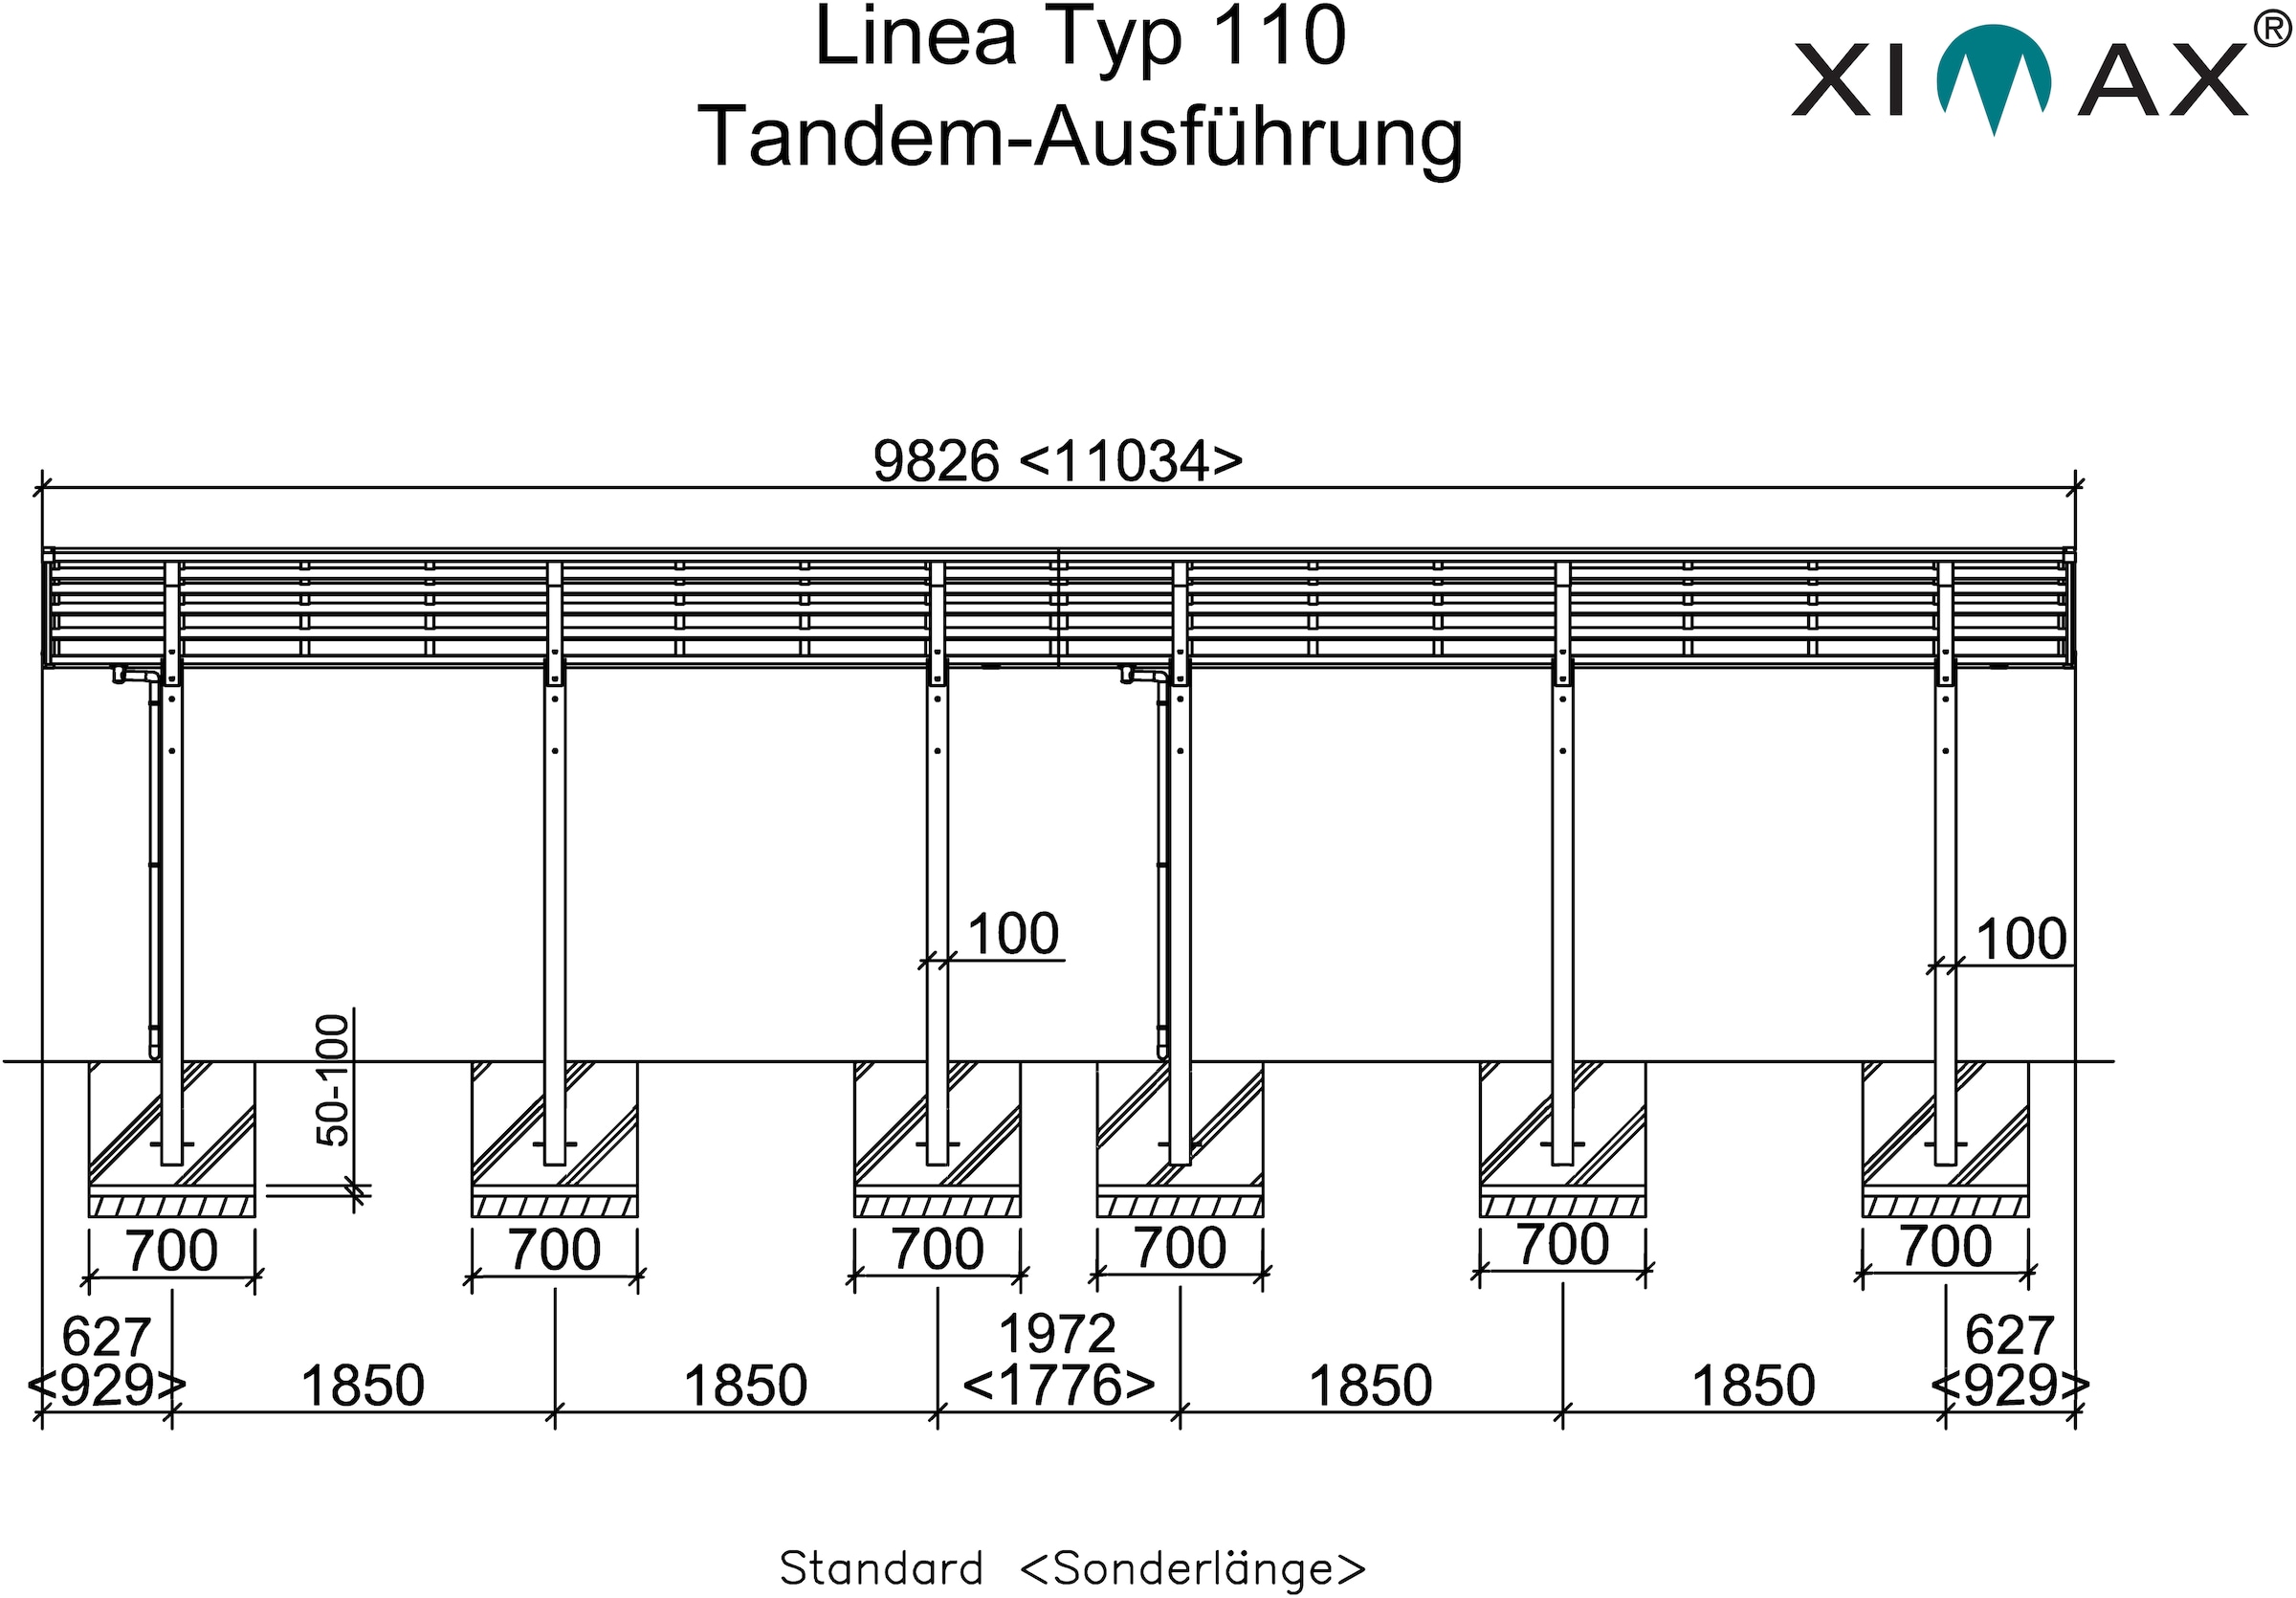 Ximax Doppelcarport »Linea Typ 110 Tandem-Edelstahl-Look«, Aluminium, 257 cm, edelstahlfarben, Aluminium